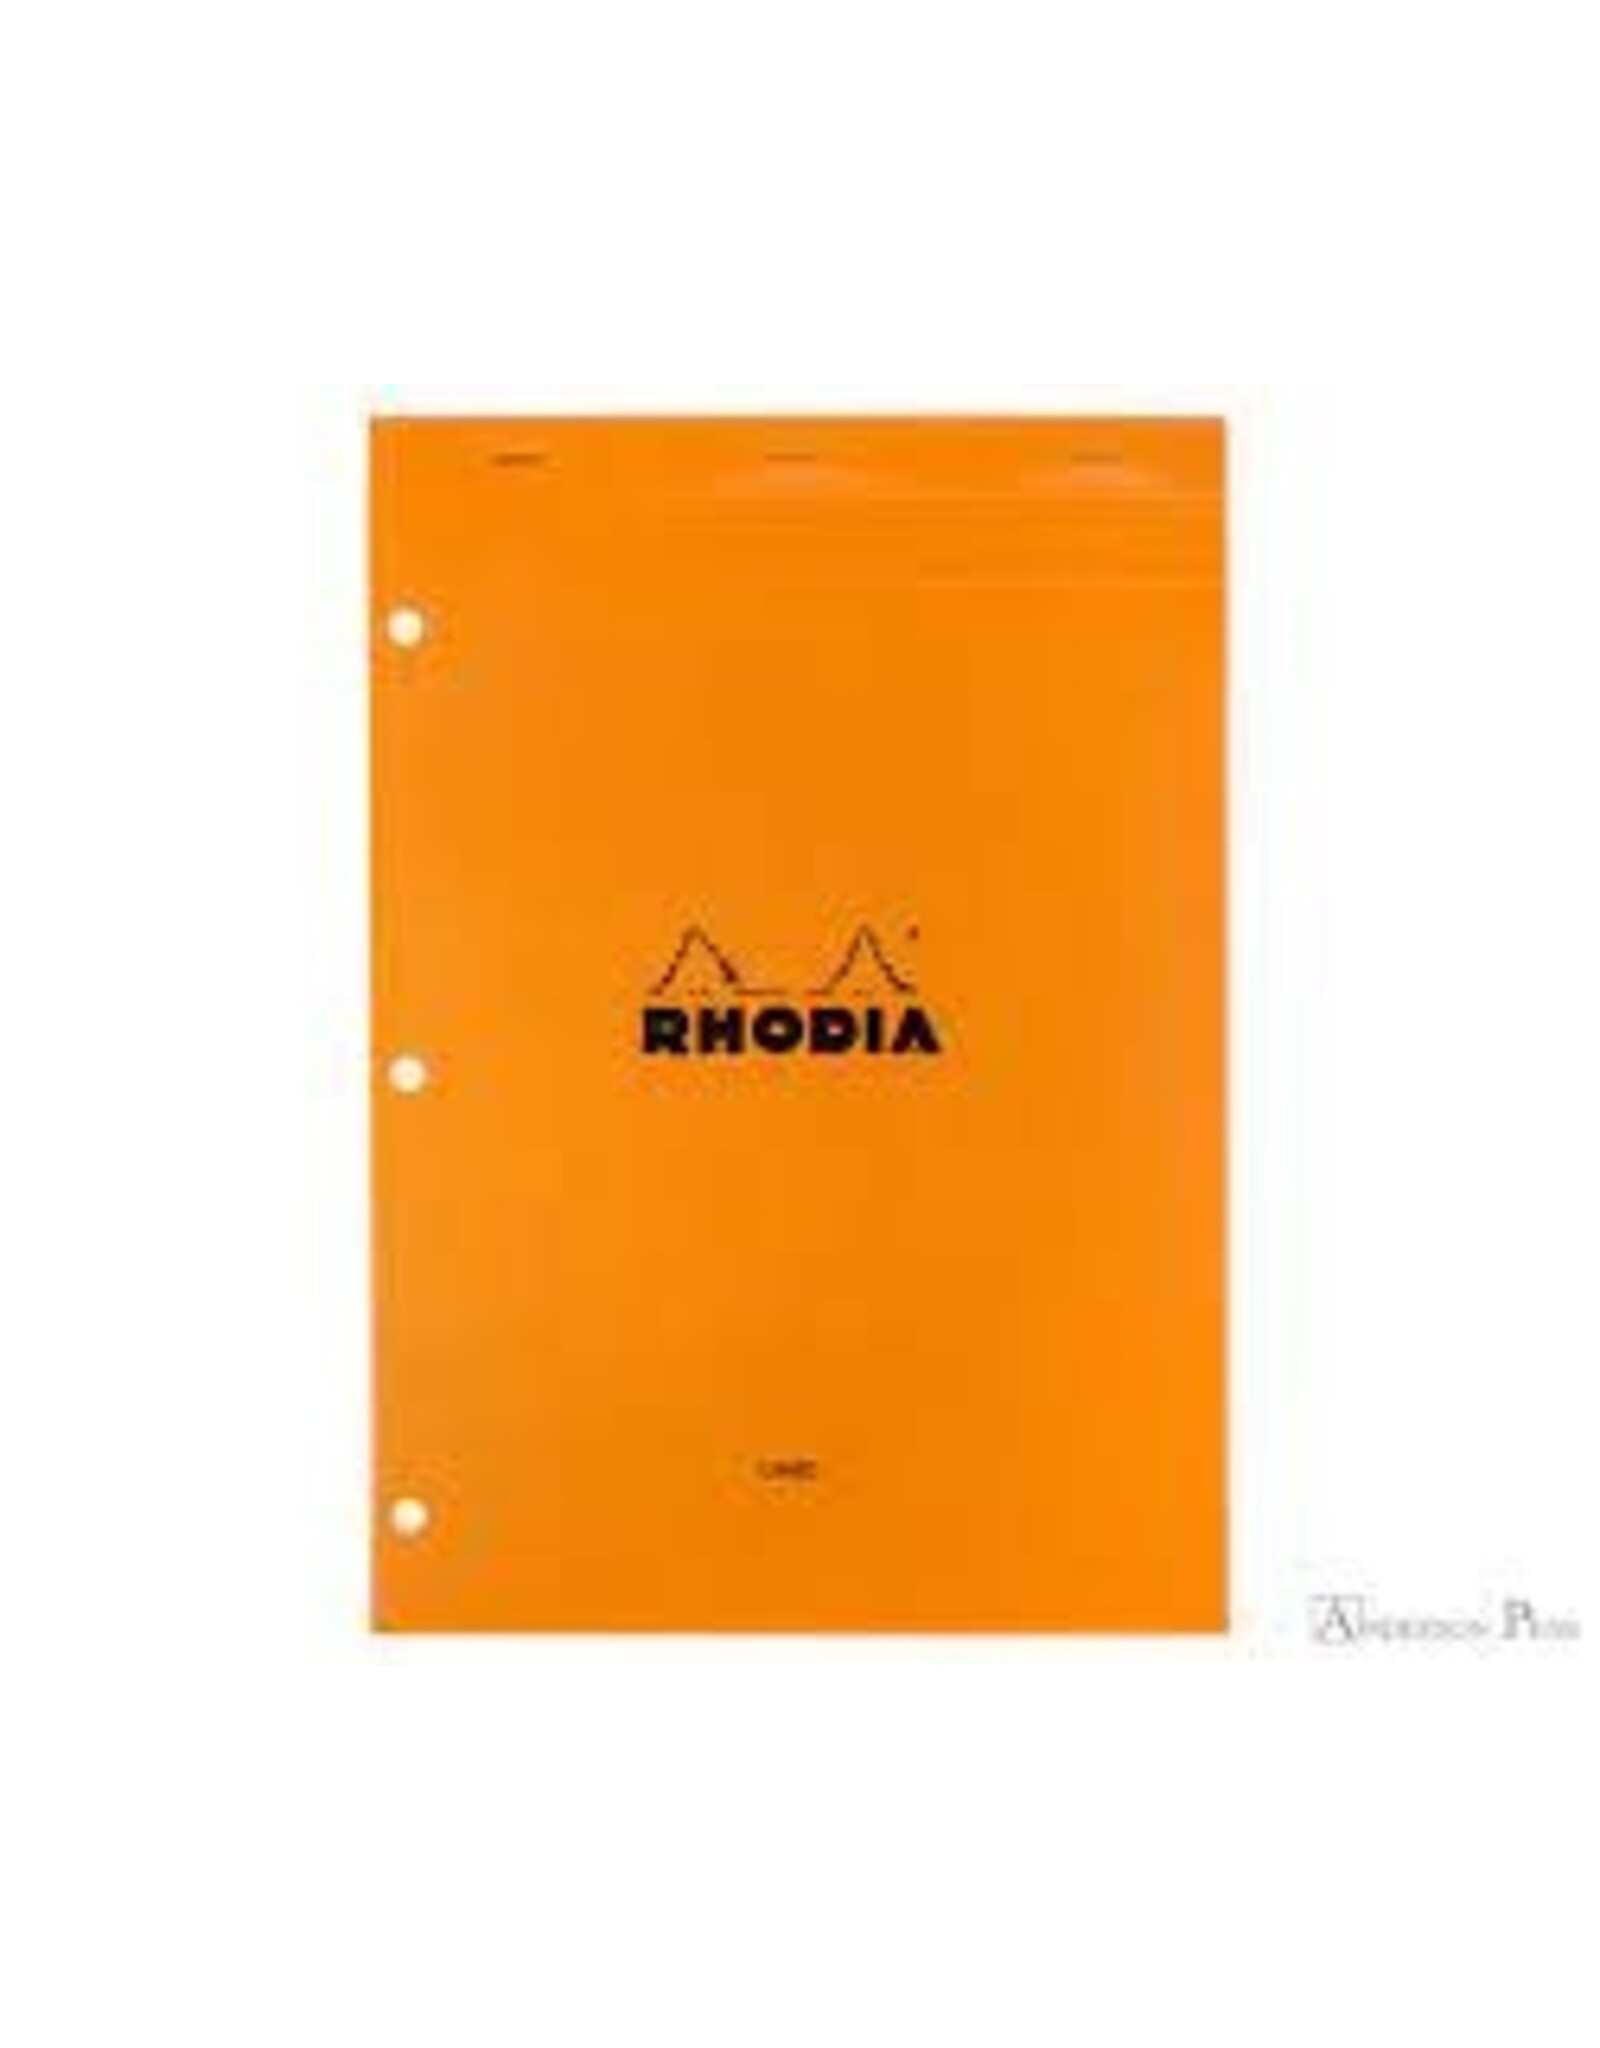 CLEARANCE Rhodia Staplebound Notepad, Lined w/ margin 80 sheets, 8 1/4 x 11 3/4, Orange